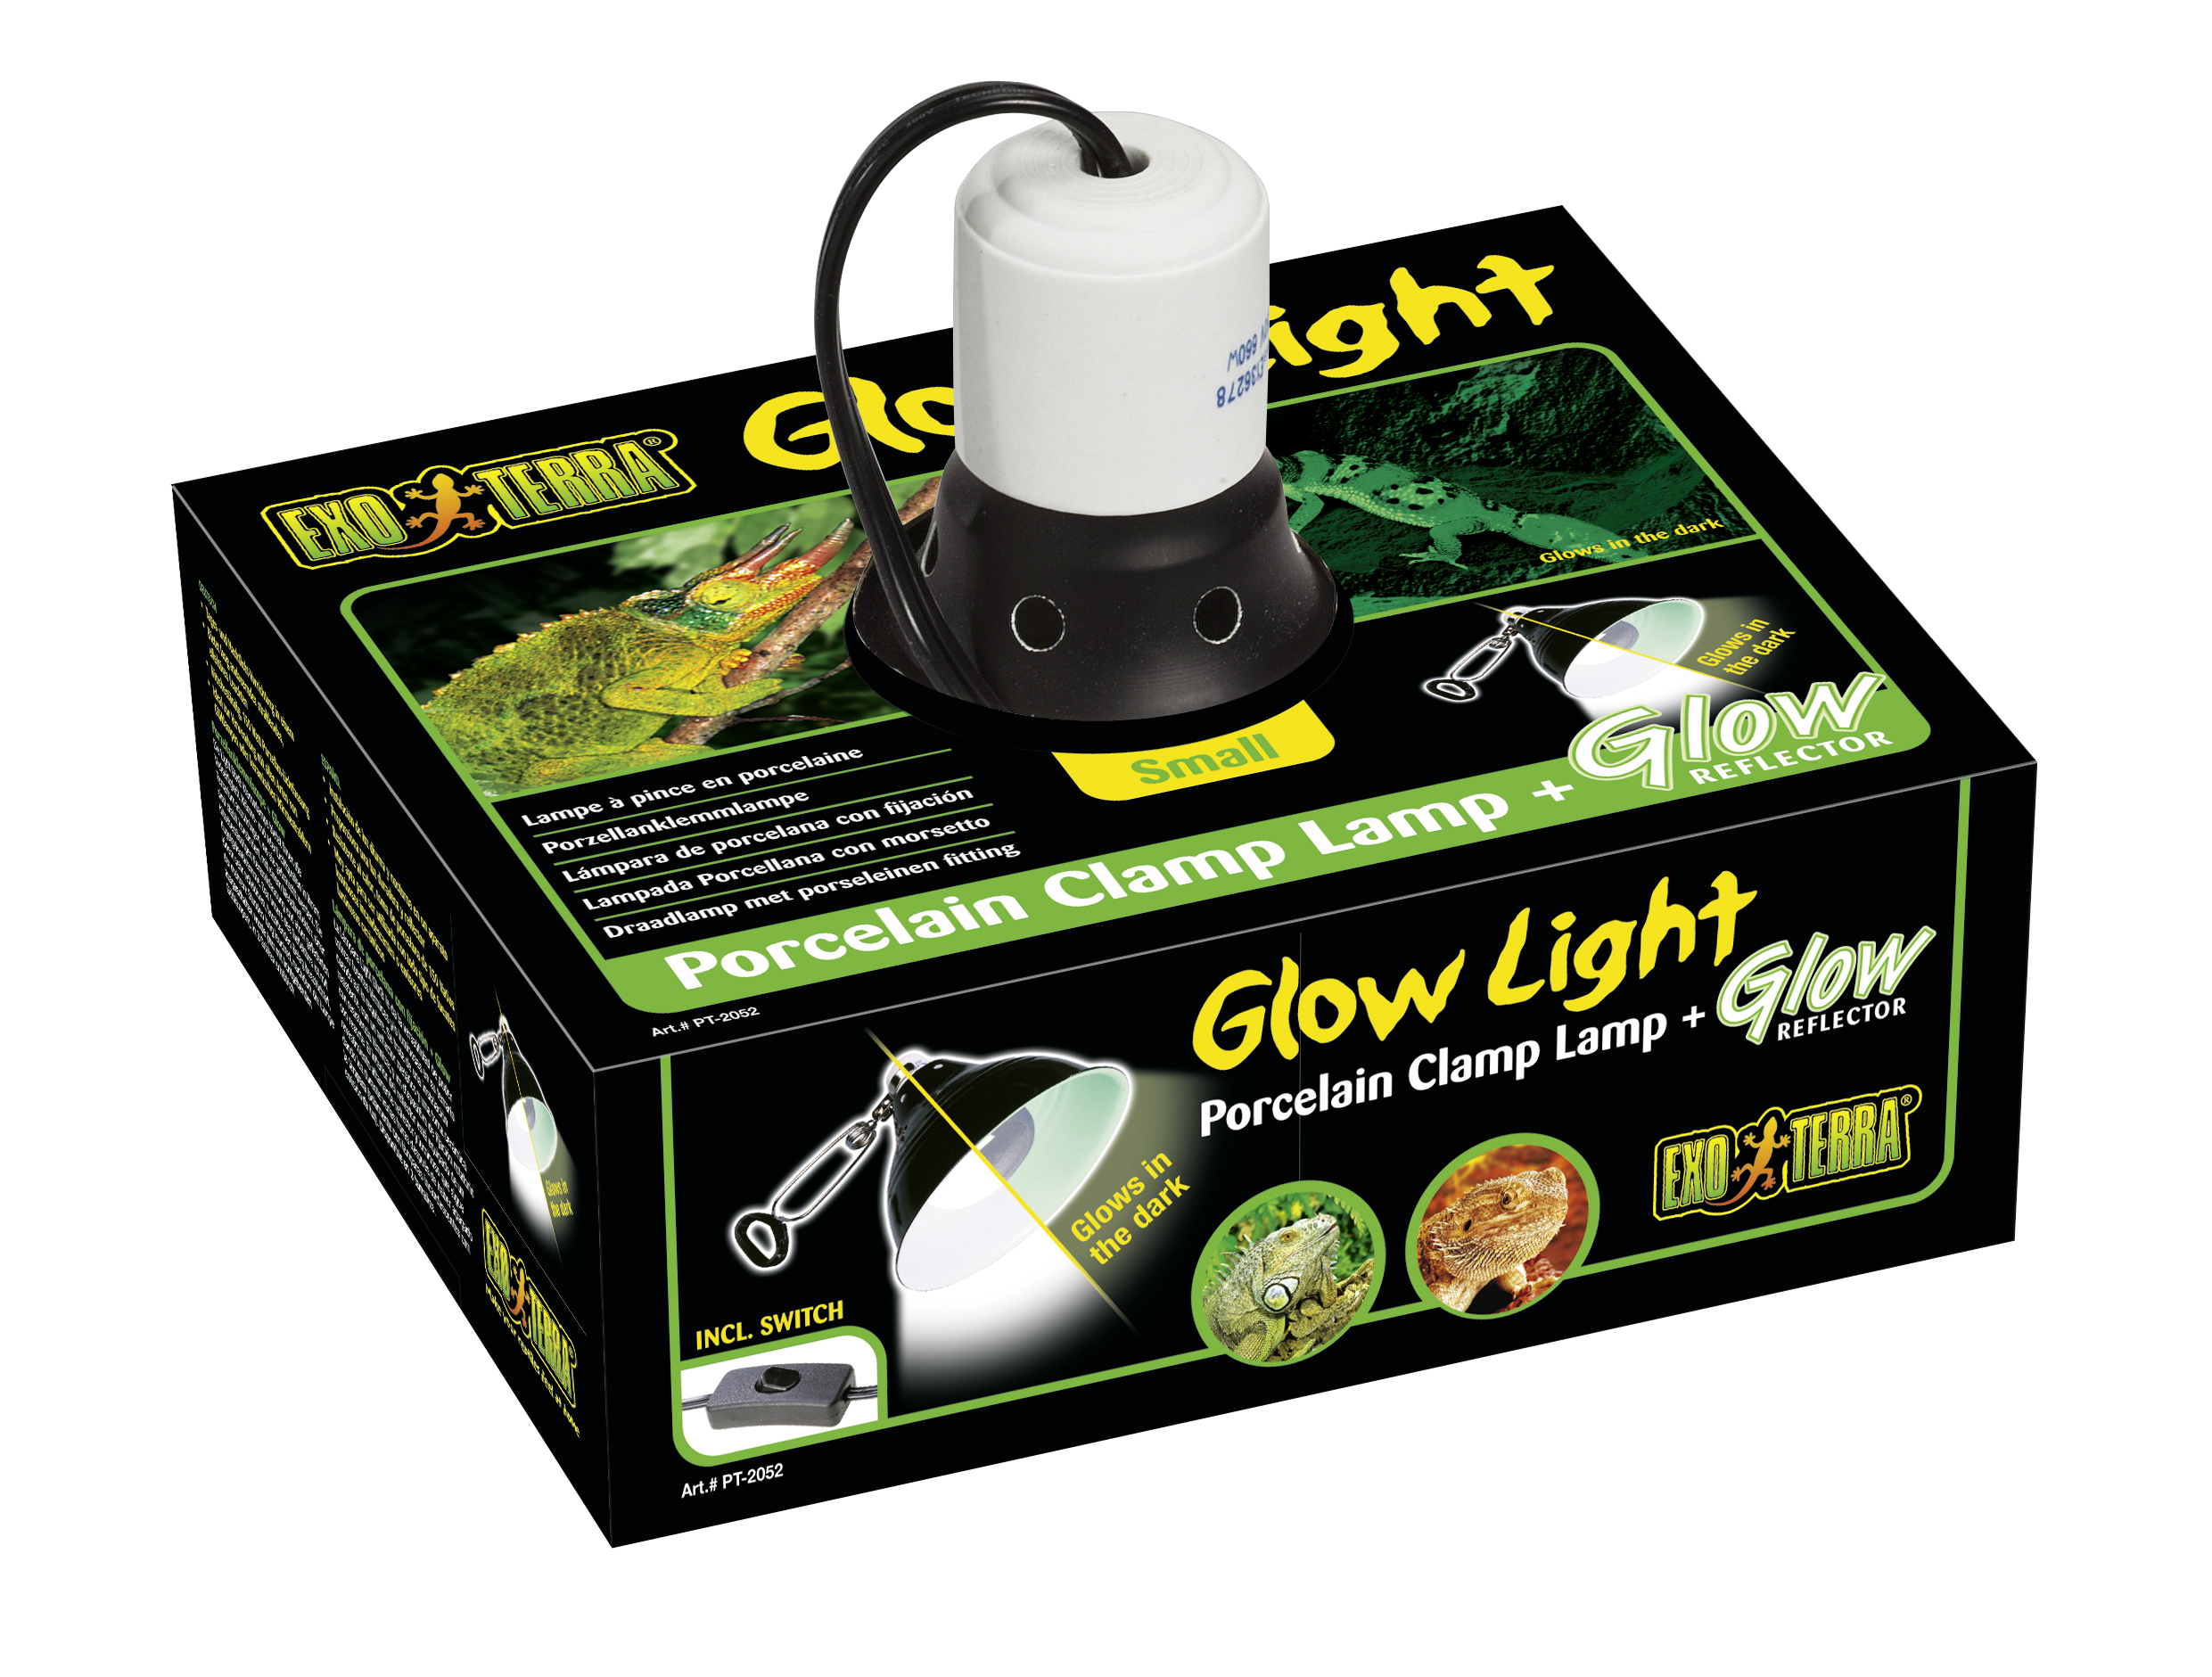 Ex glow light porzellan - <Product shot>